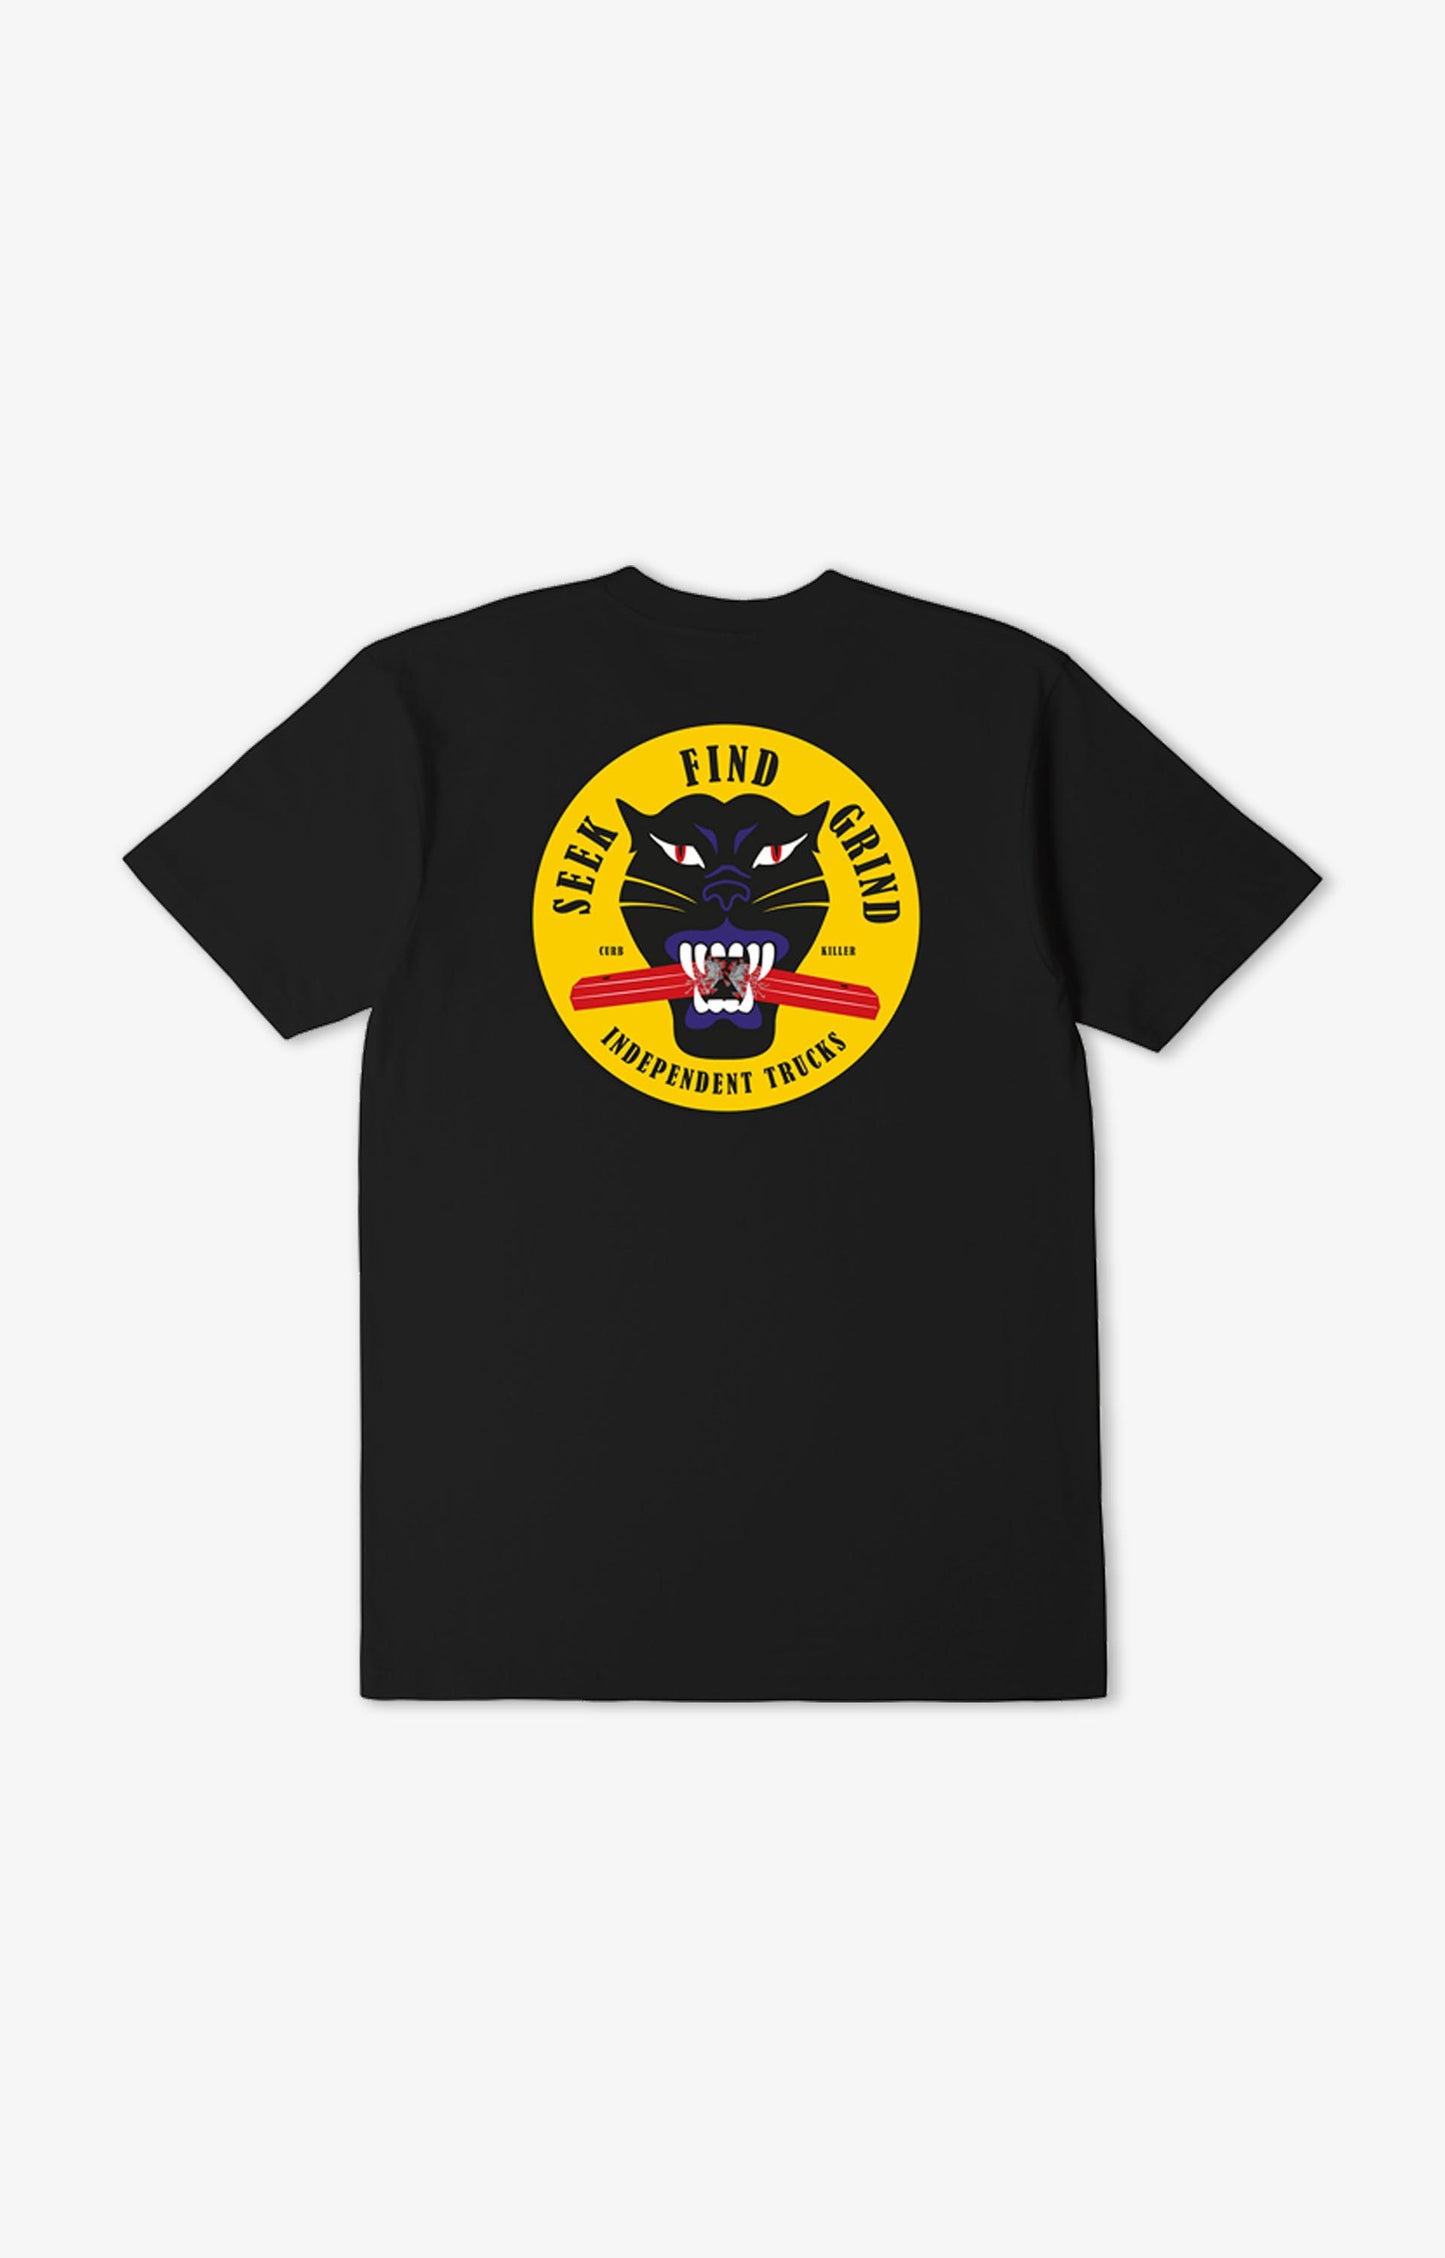 Independent Kurb Killer Youth T-Shirt, Black